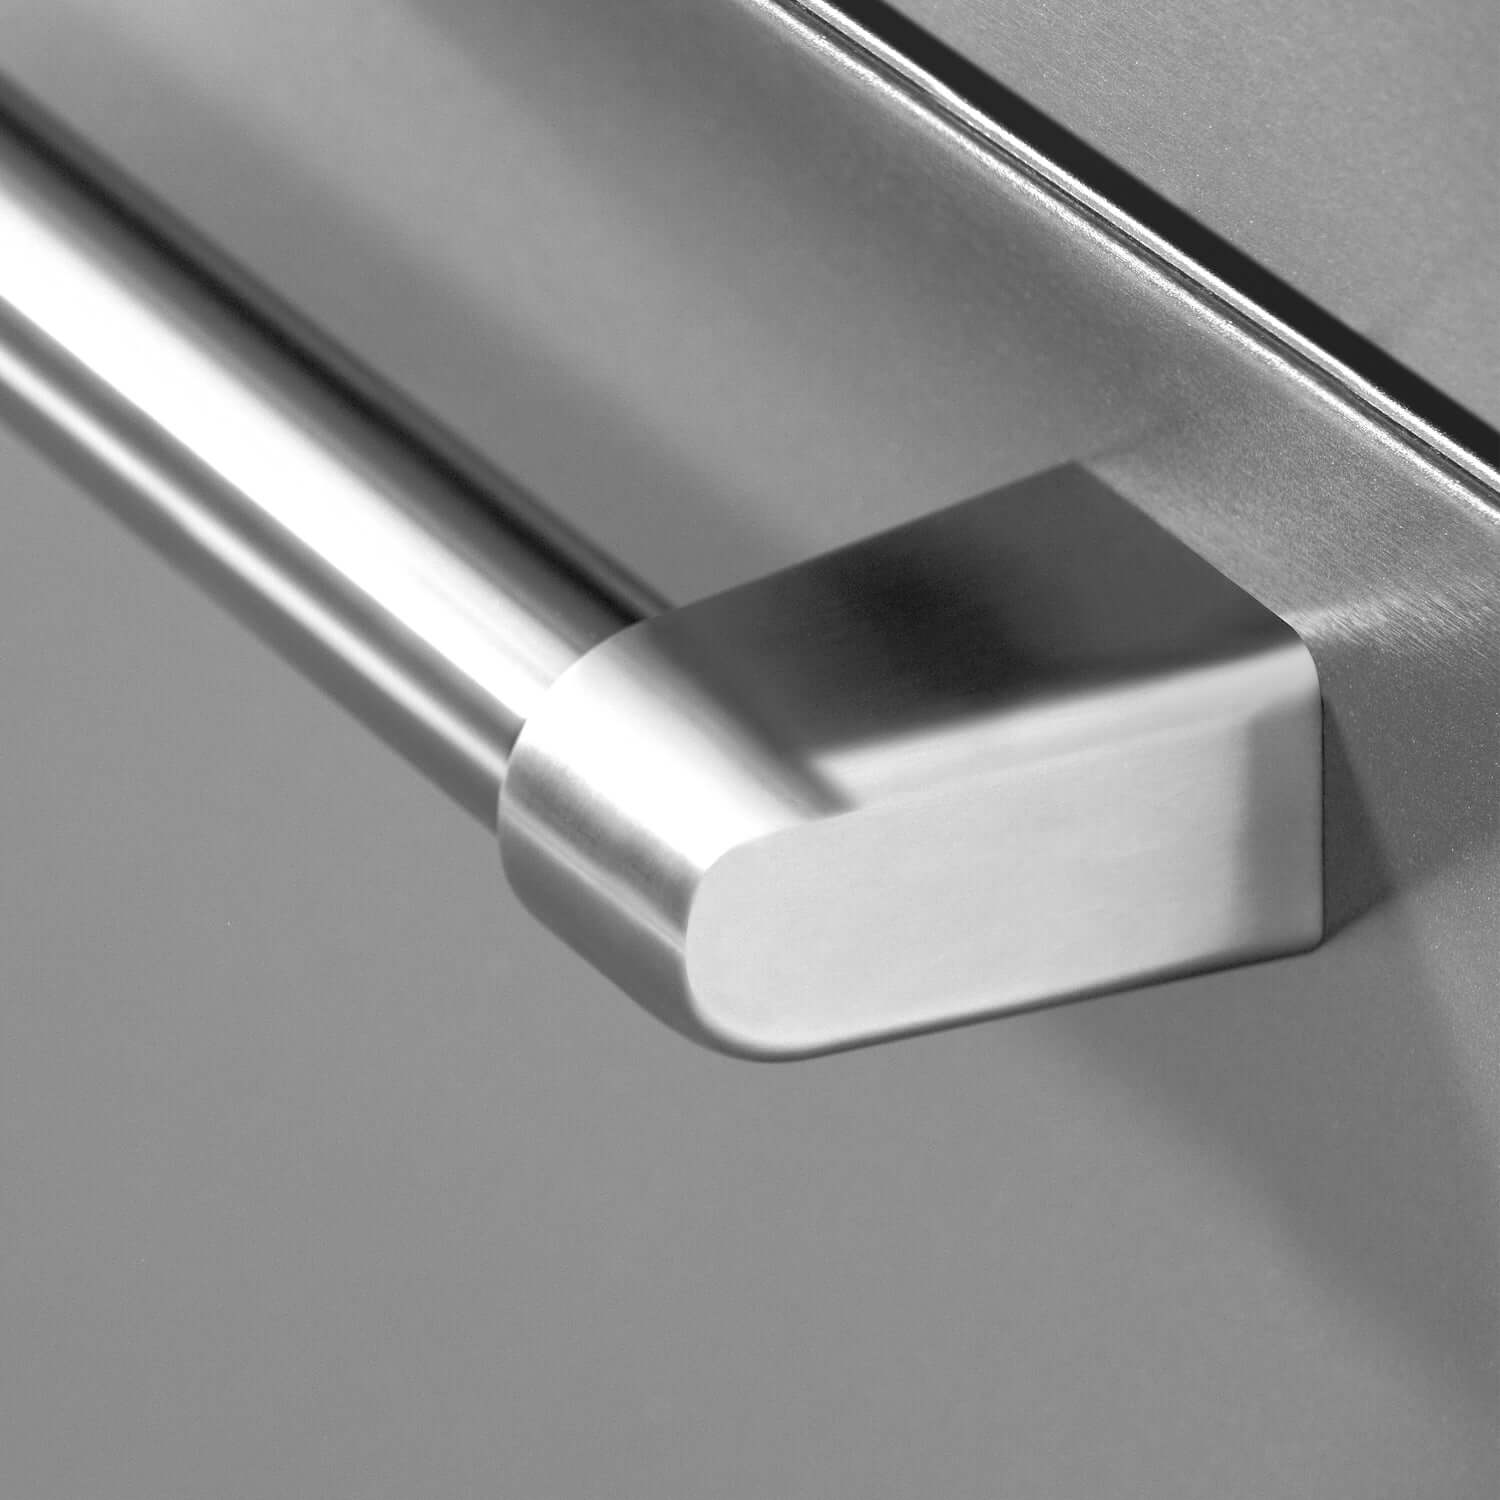 Stainless steel handle on bottom freezer drawer on ZLINE 36" French door refrigerator.